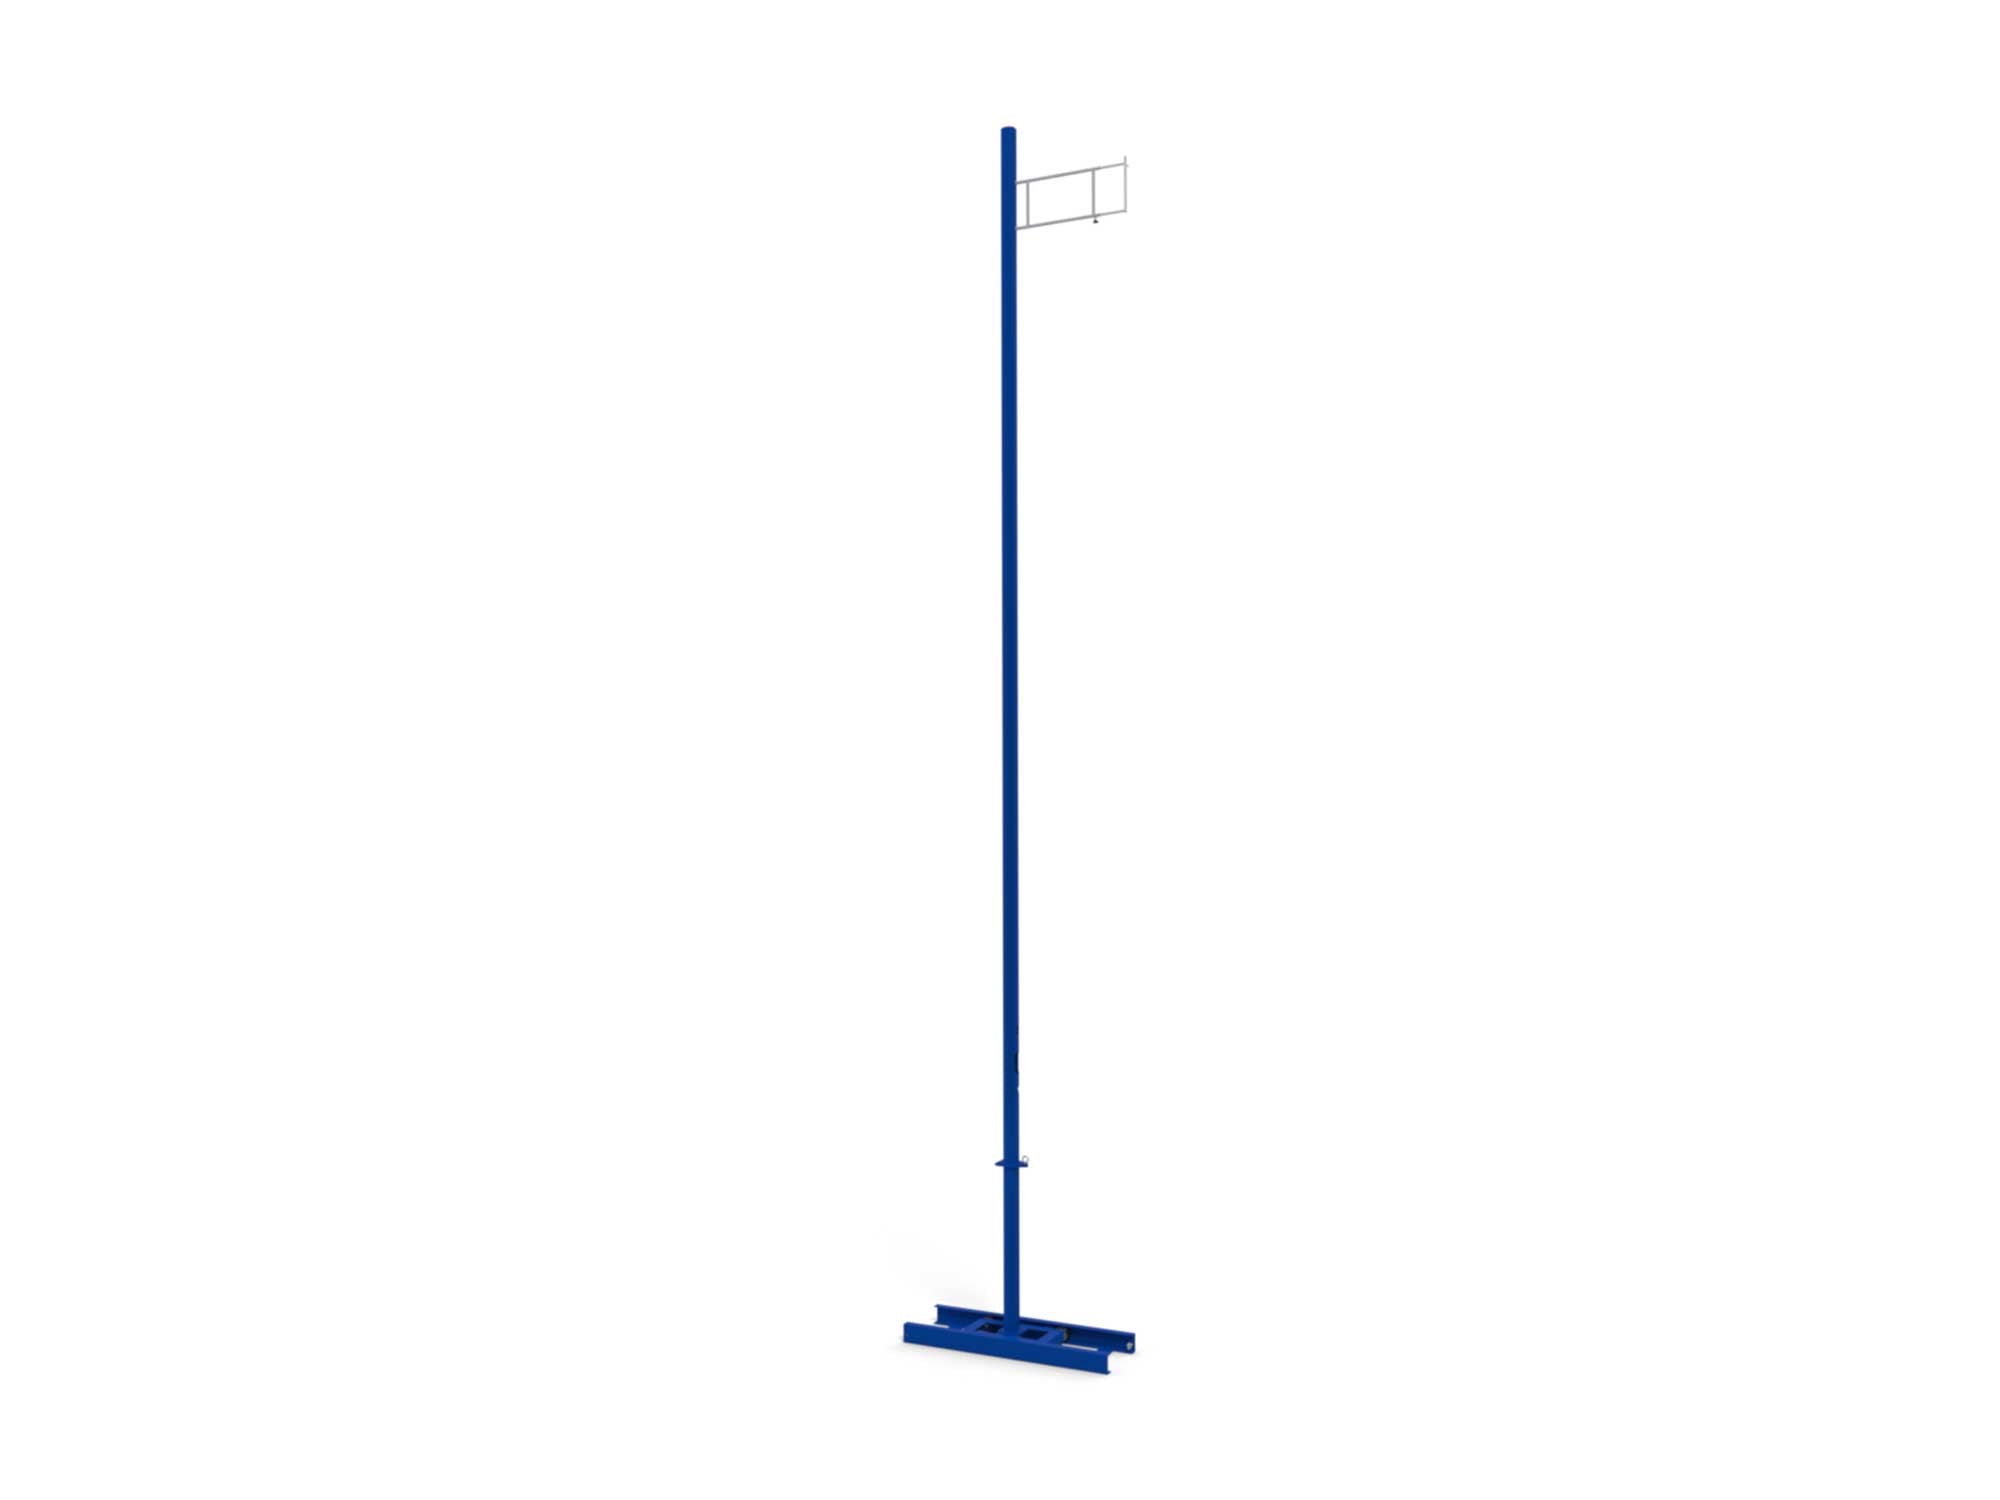 IAAF certified rail mounted pole vault posts